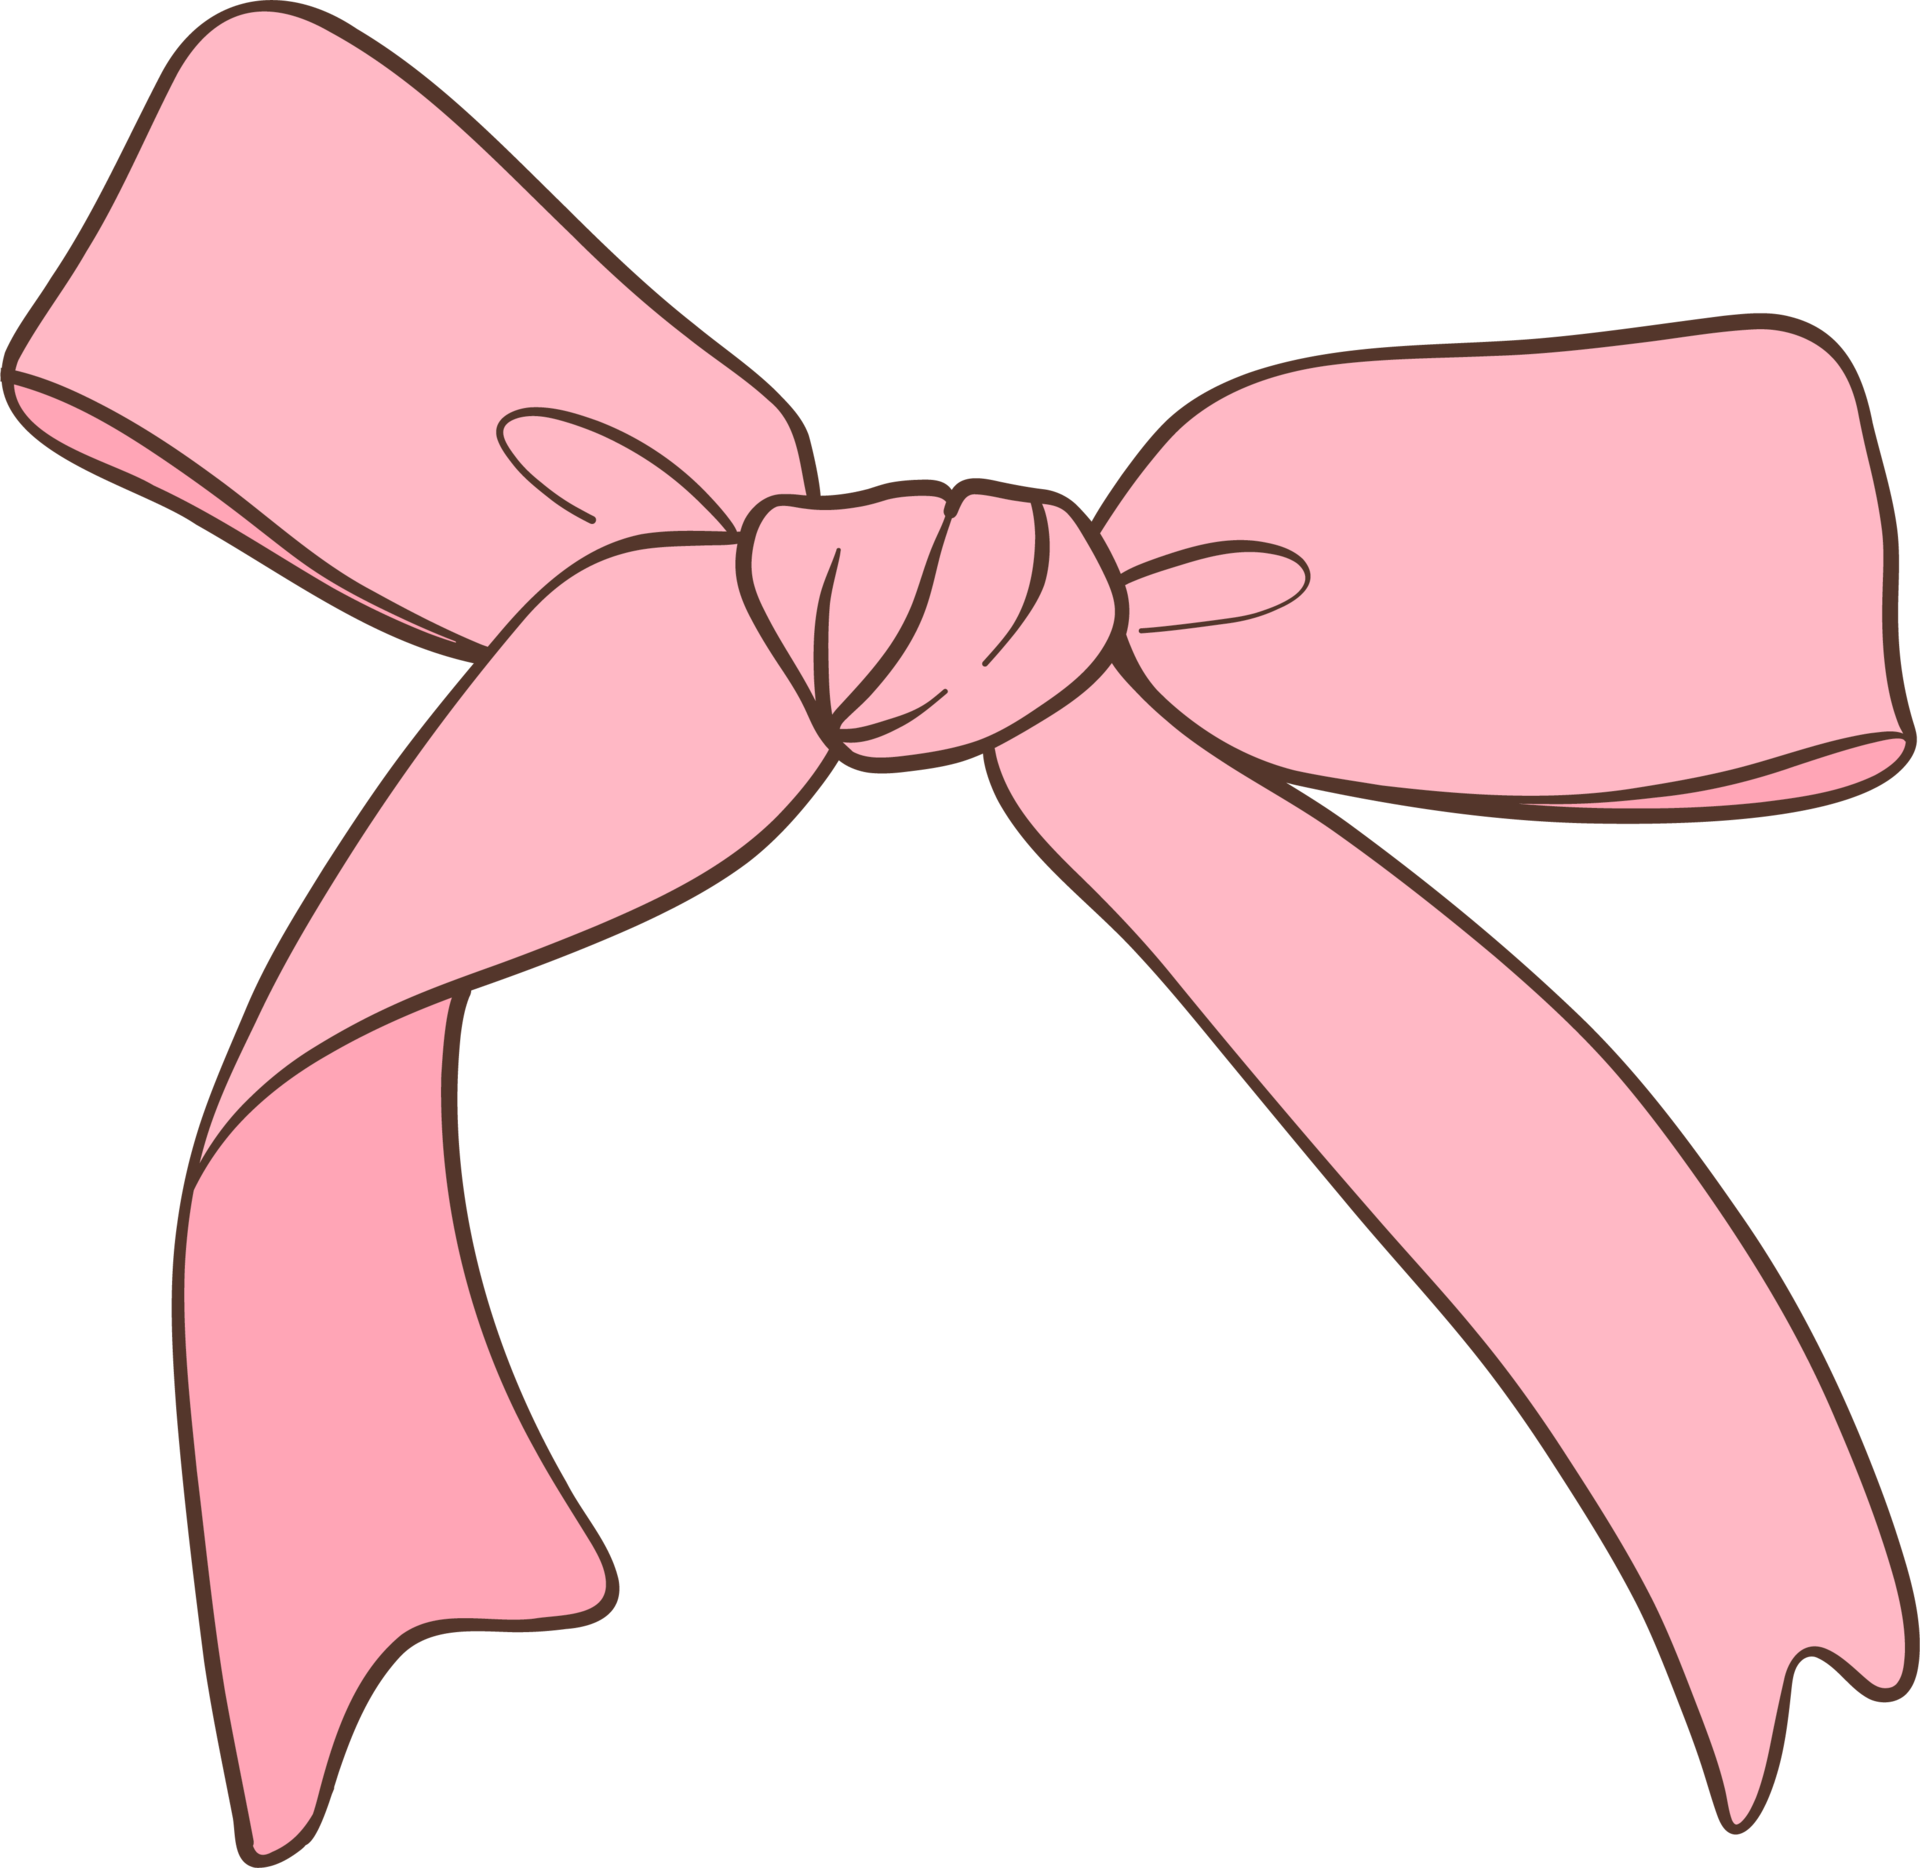 Pink Coquette ribbon bow watercolor hand drawn - Stock Illustration  [110068348] - PIXTA